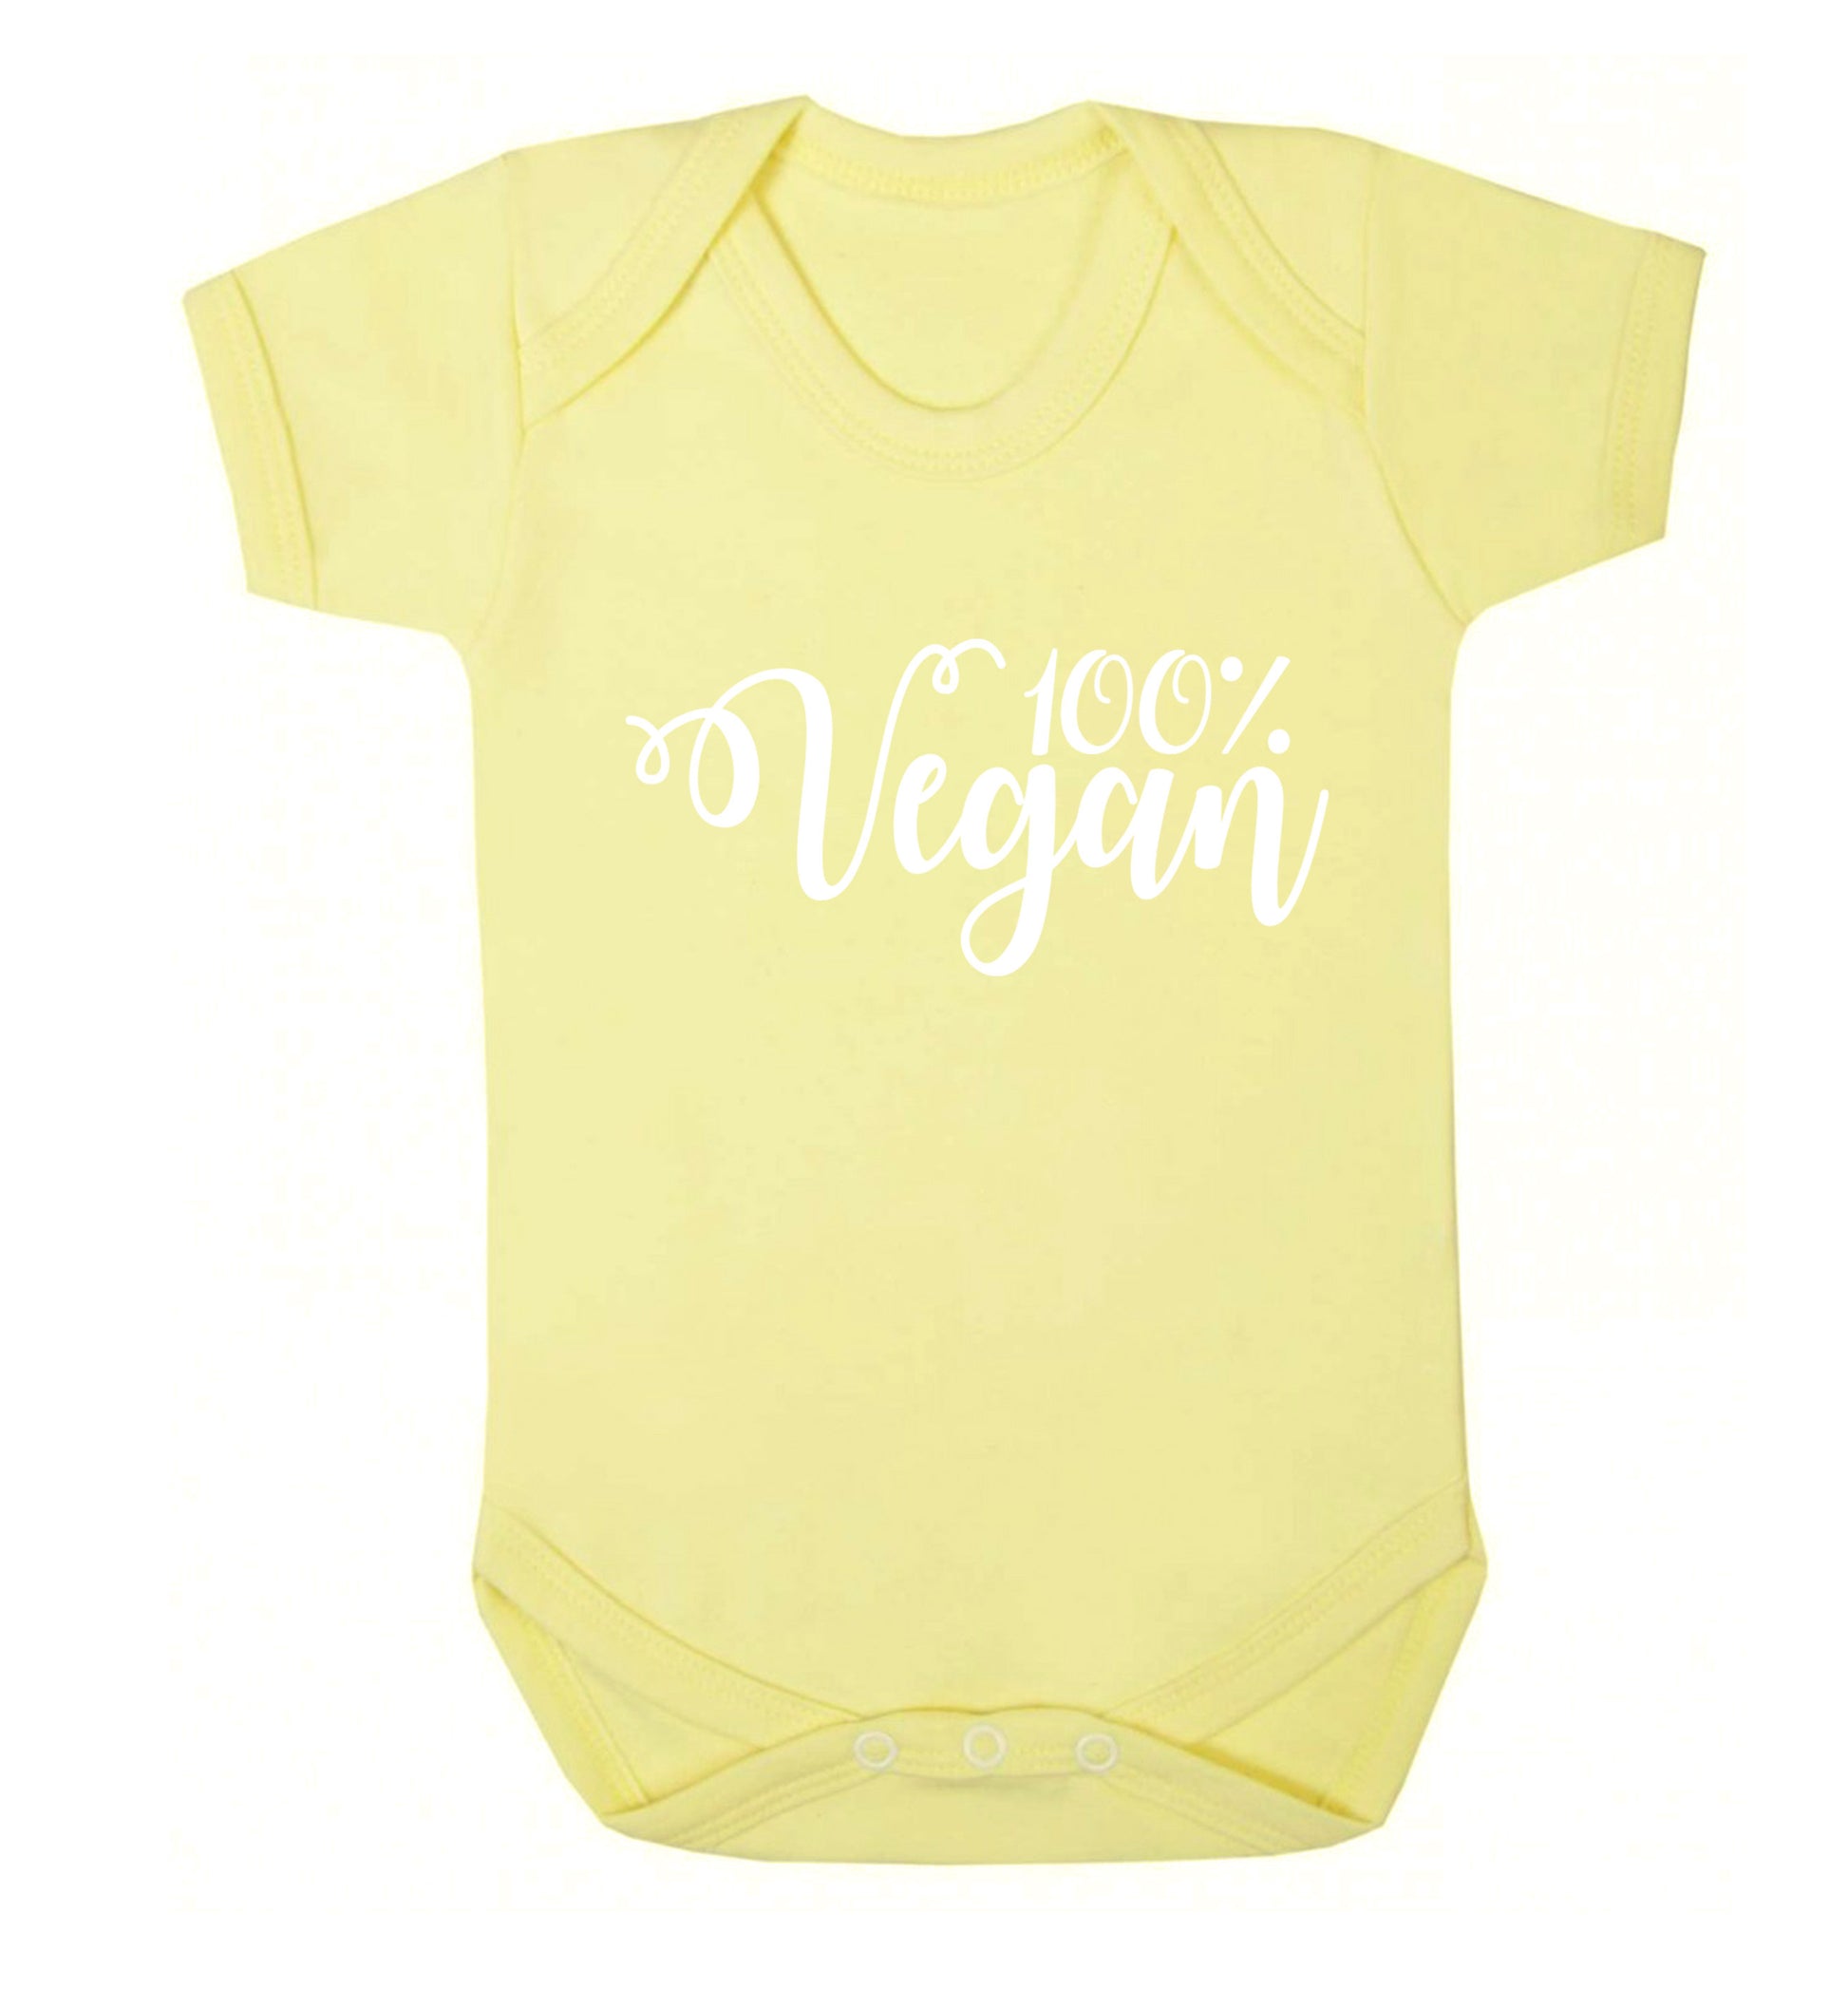 100% Vegan Baby Vest pale yellow 18-24 months